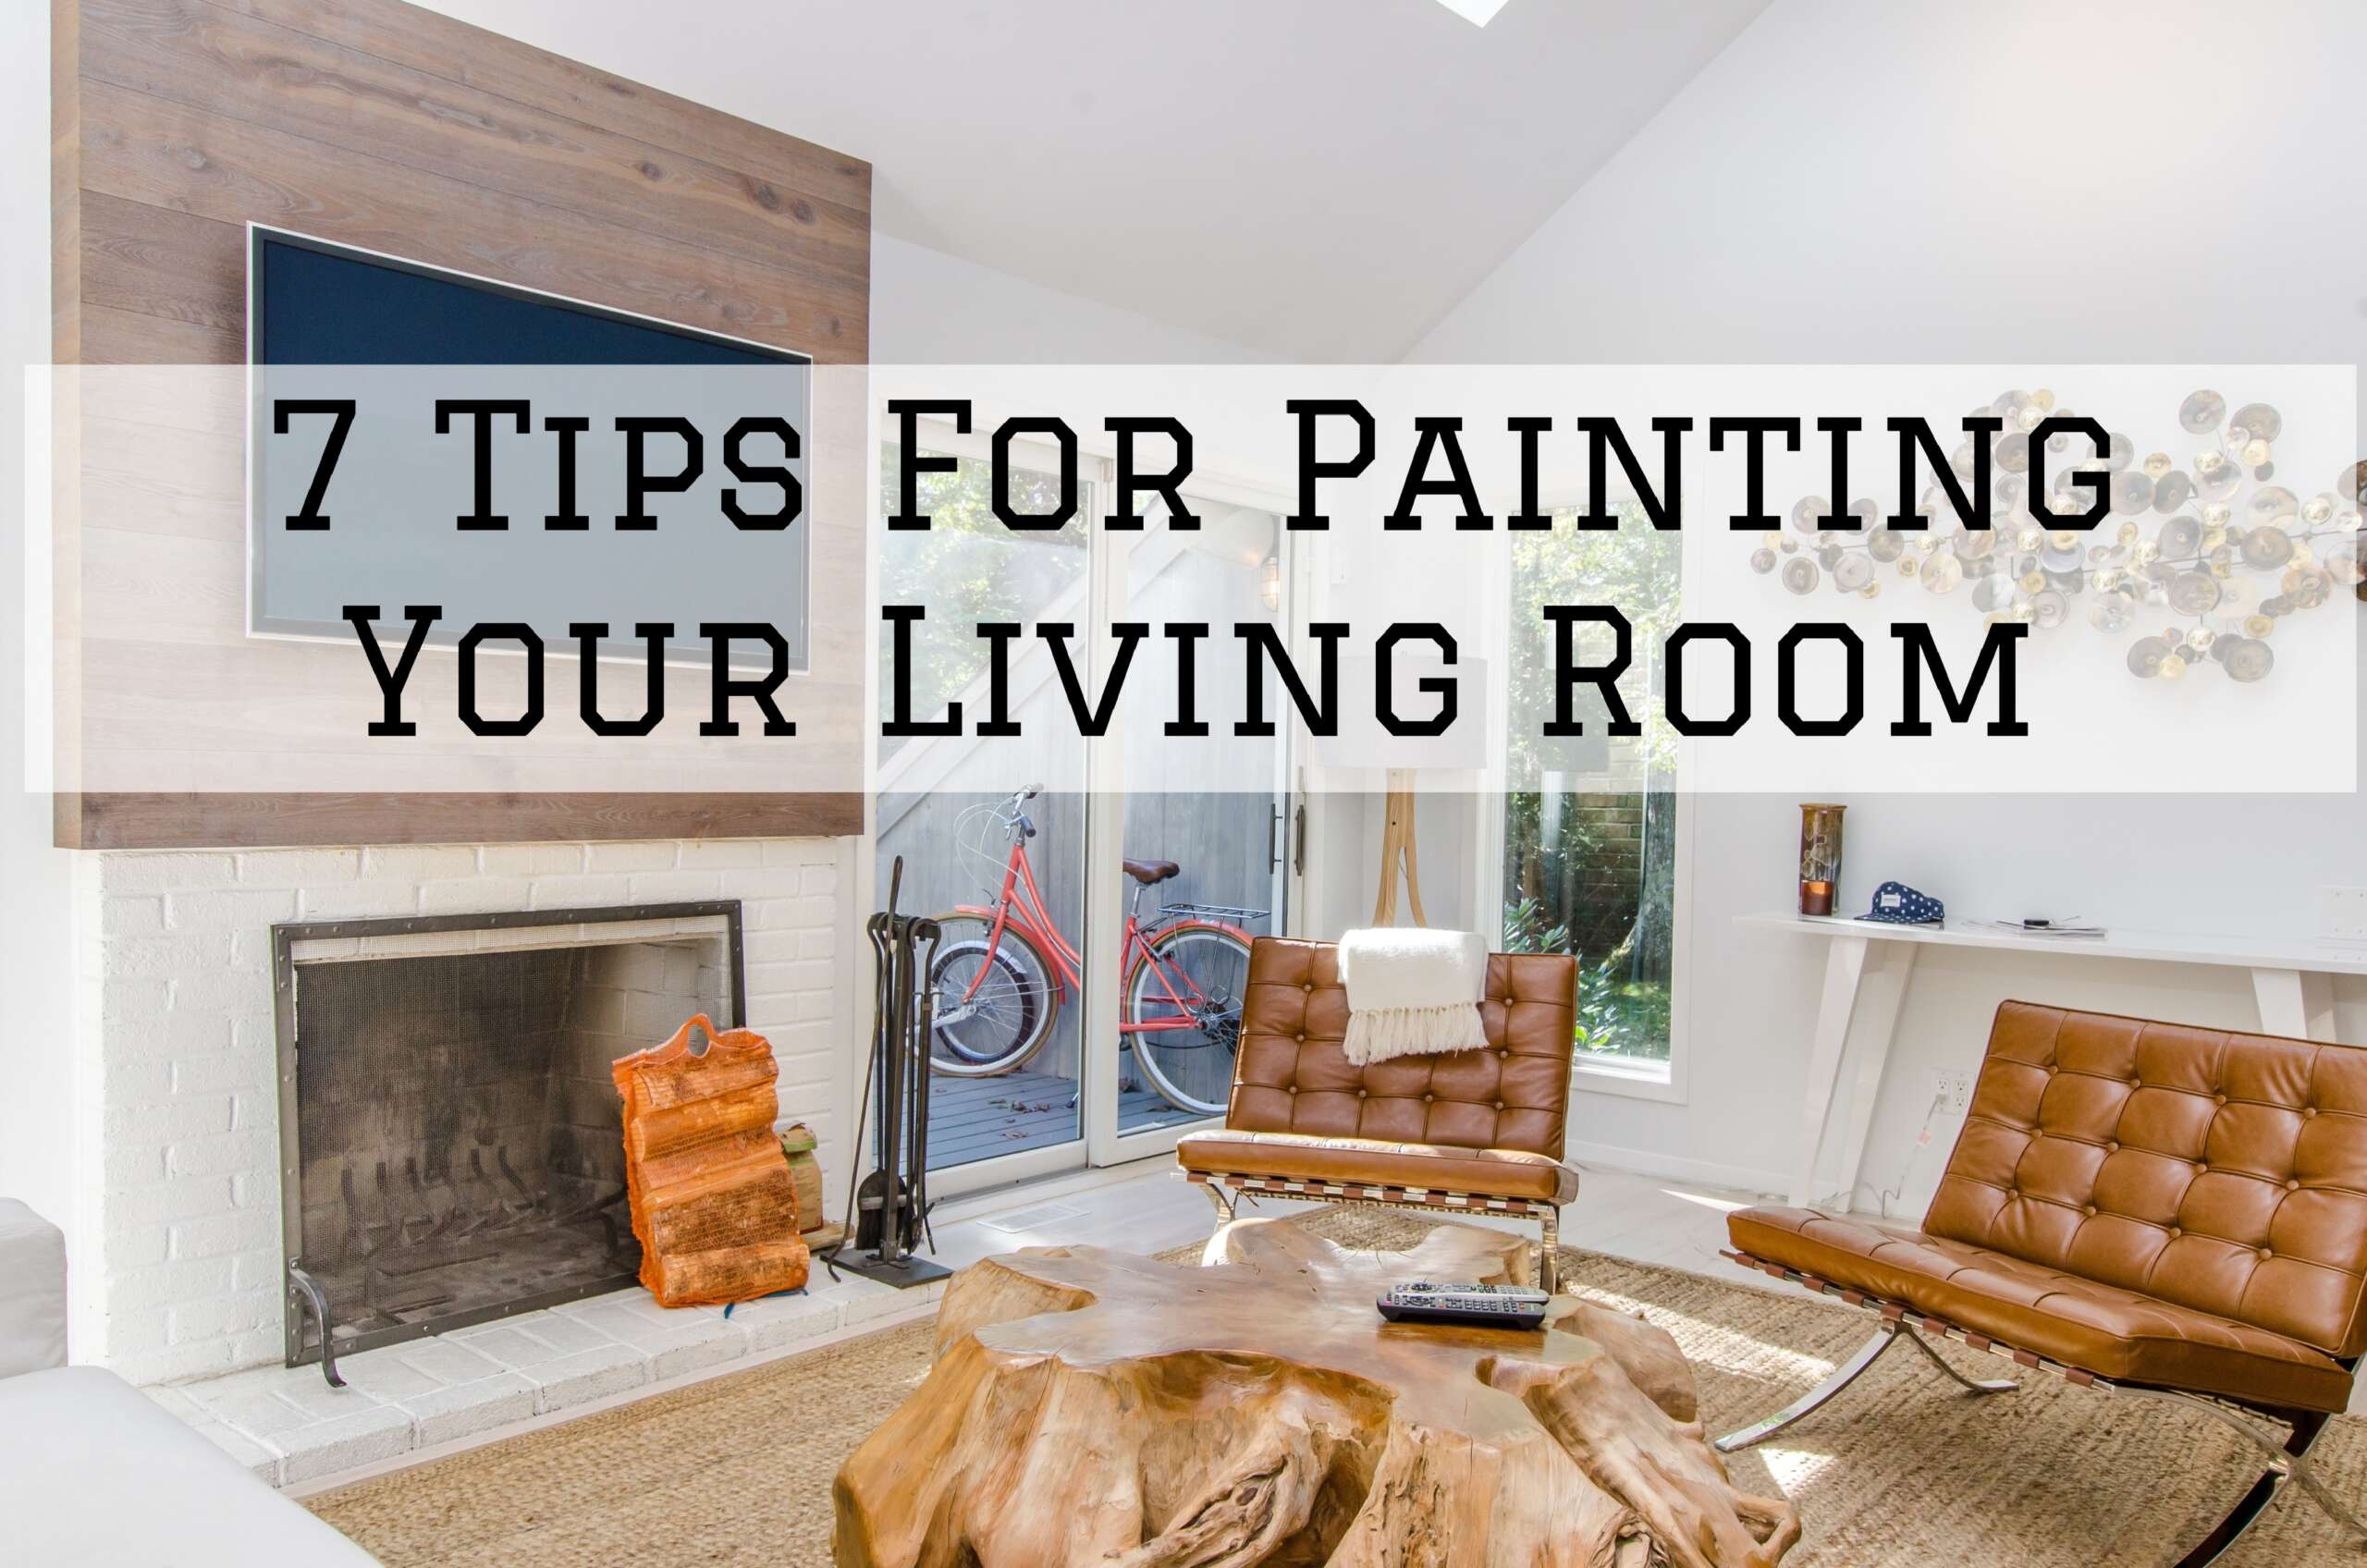 2021-01-19 Image Painting Inc Arlington VA Painting Living Room Tips